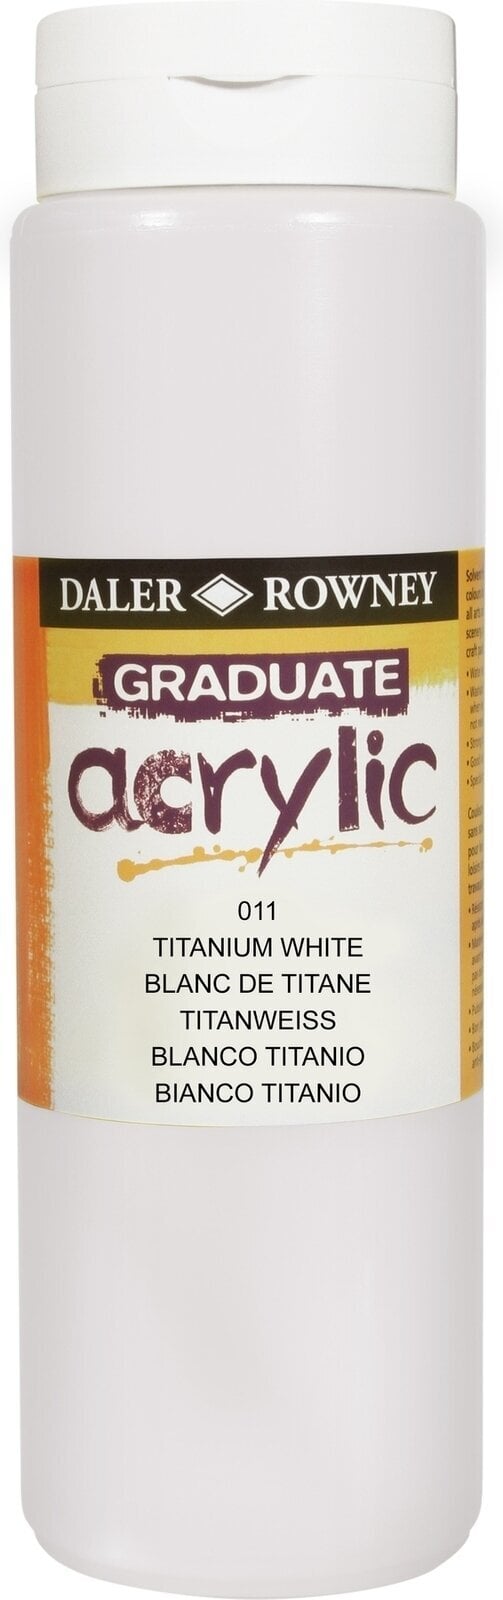 Acrylic Paint Daler Rowney Graduate Acrylic Paint Titanium White 500 ml 1 pc